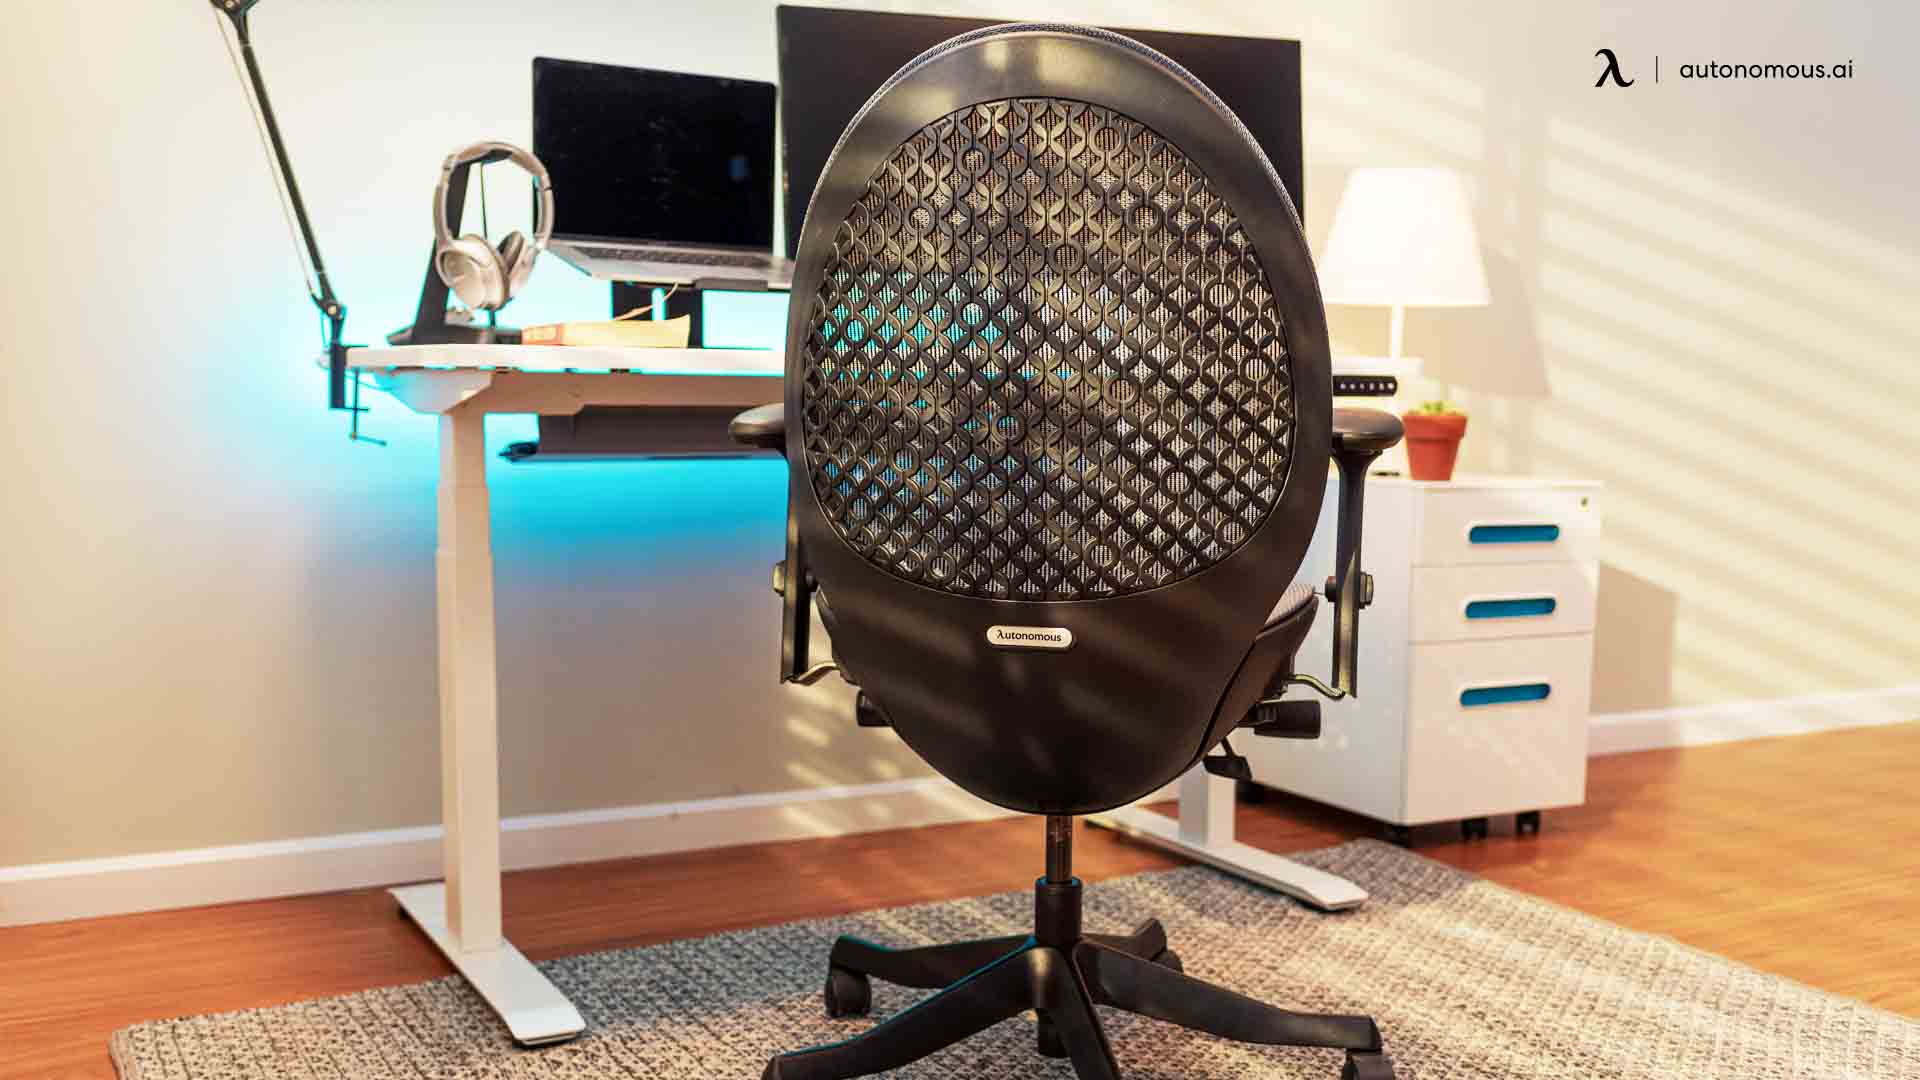 AvoChair stylish home office chair